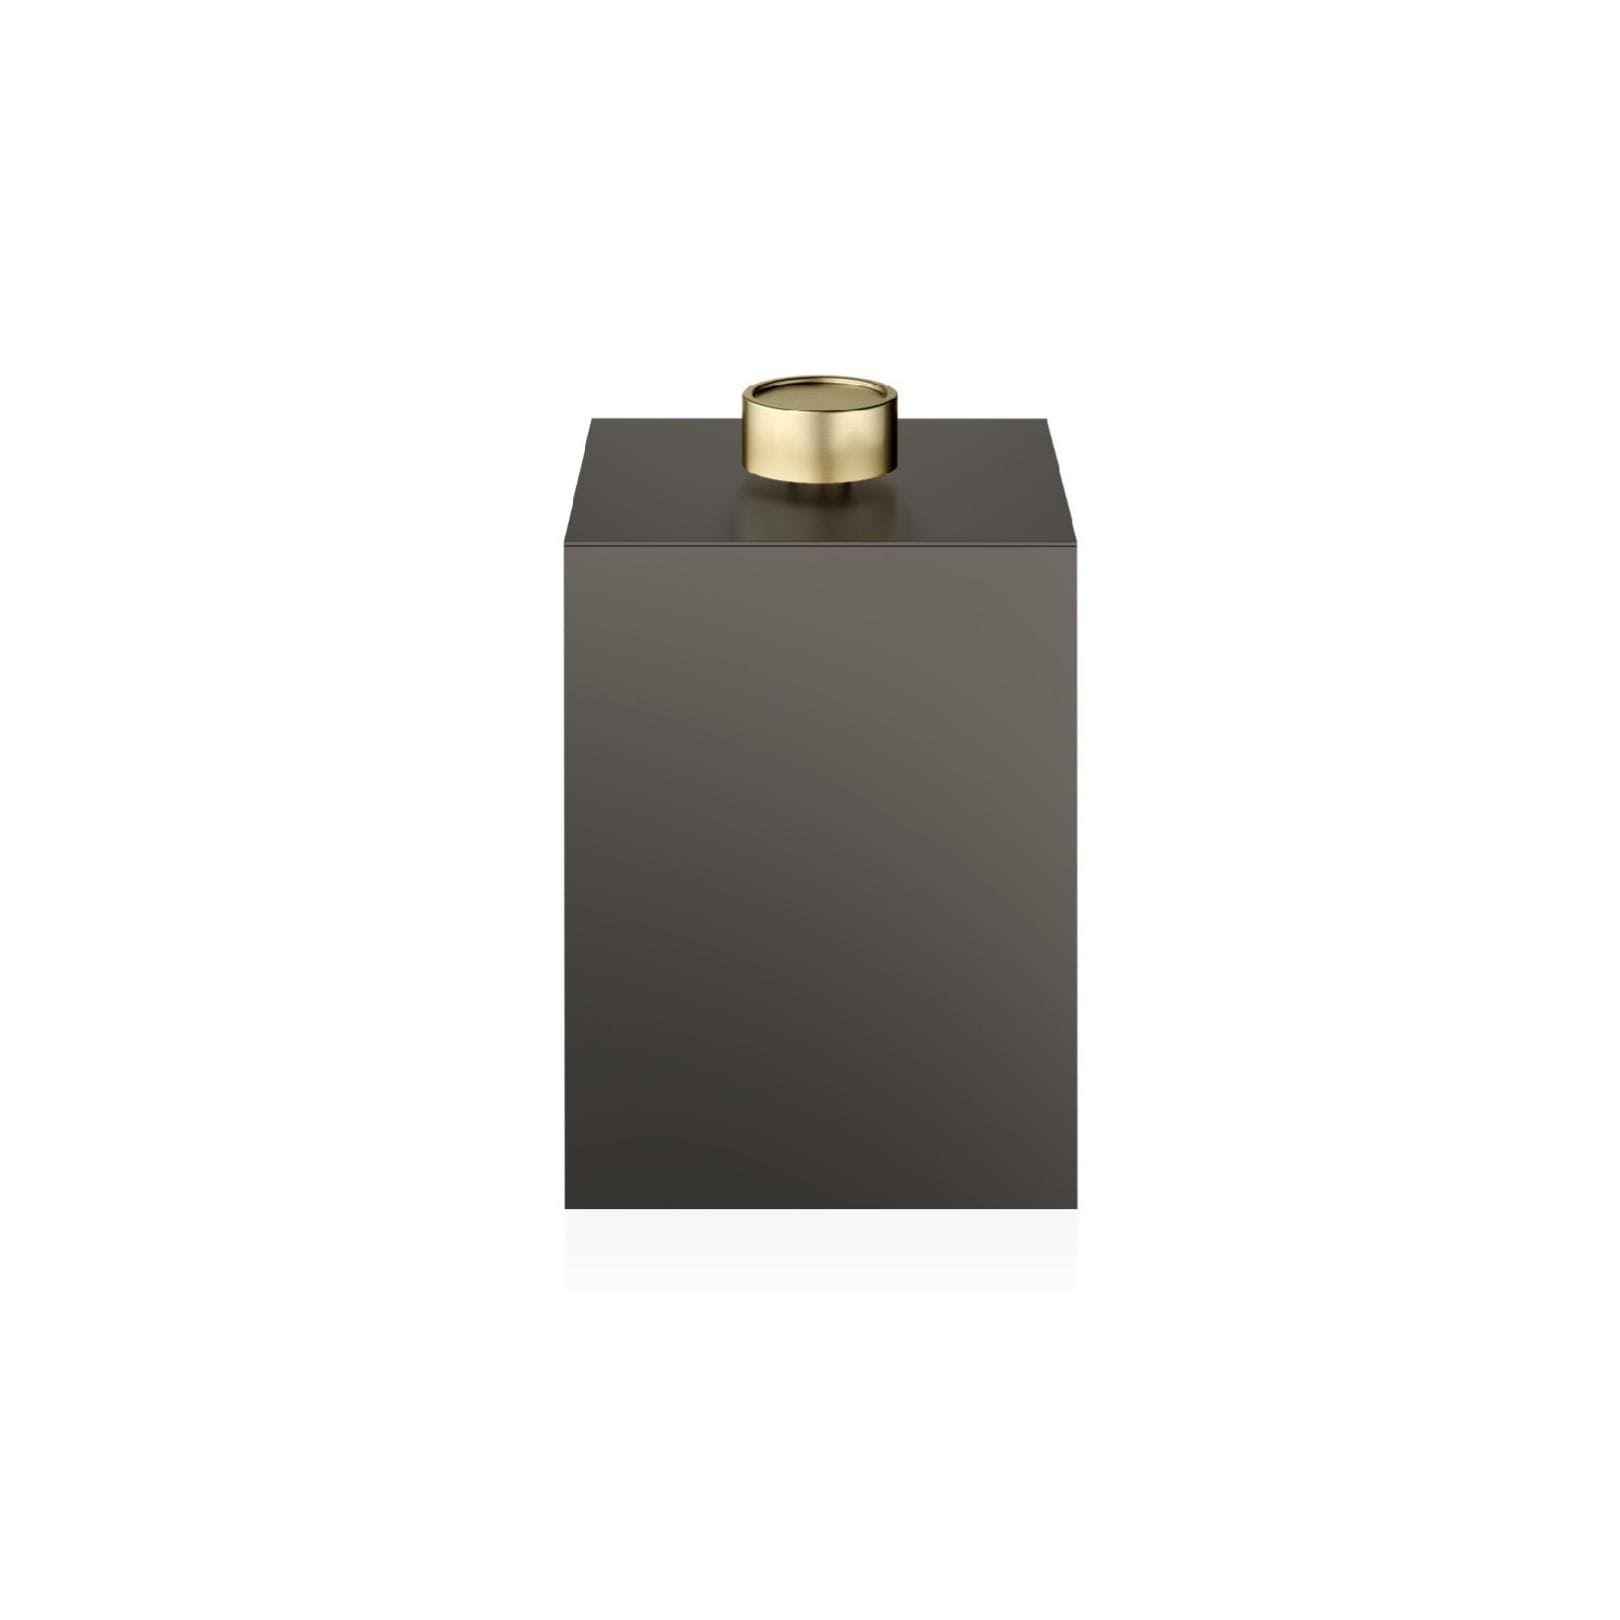 Paper bin with cover dark bronze/gold matt Dw 76 Decor Walther